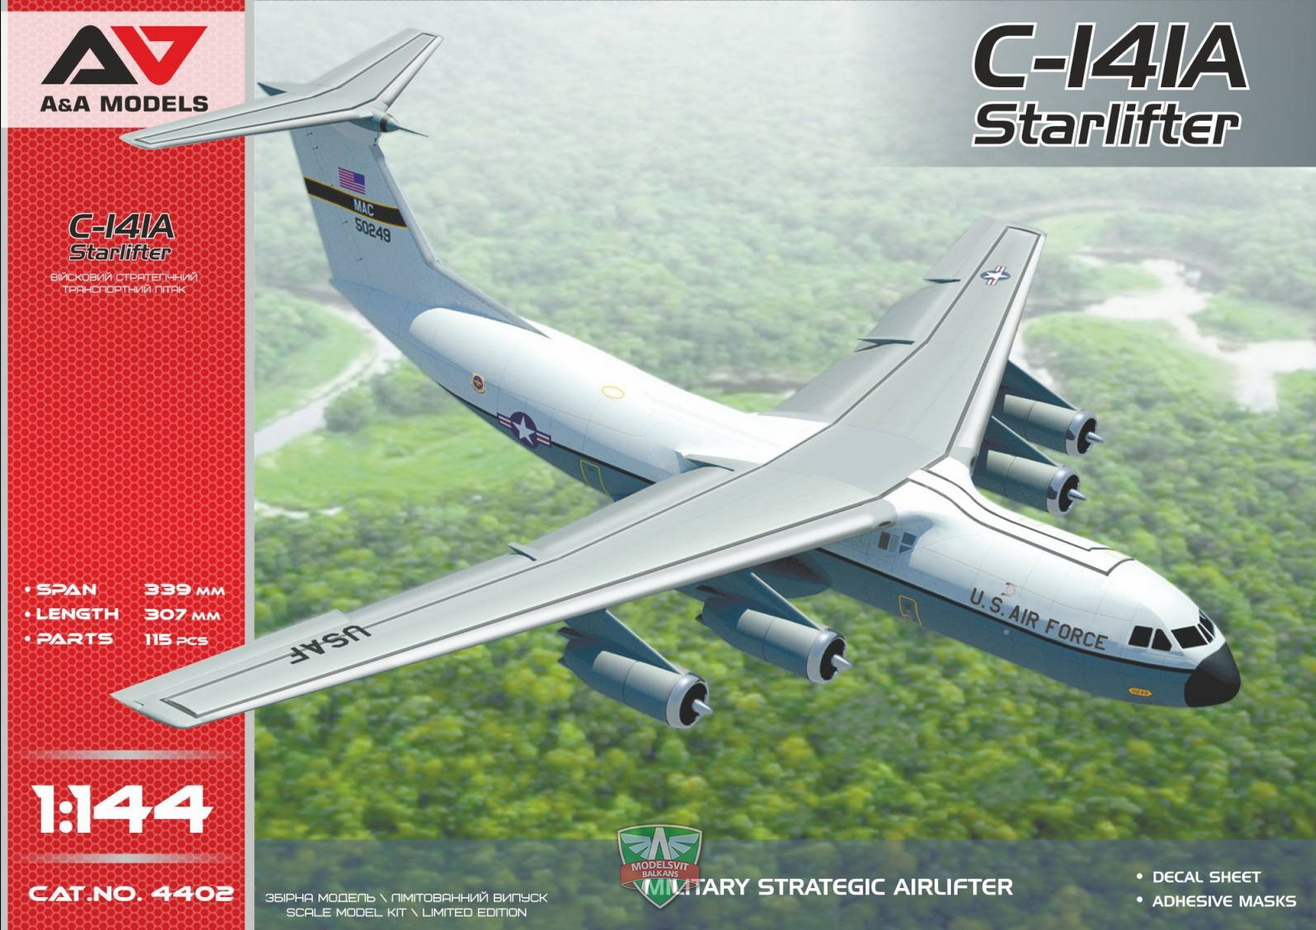 Lockheed C-141A Starlifter - A&A MODELS 1/144